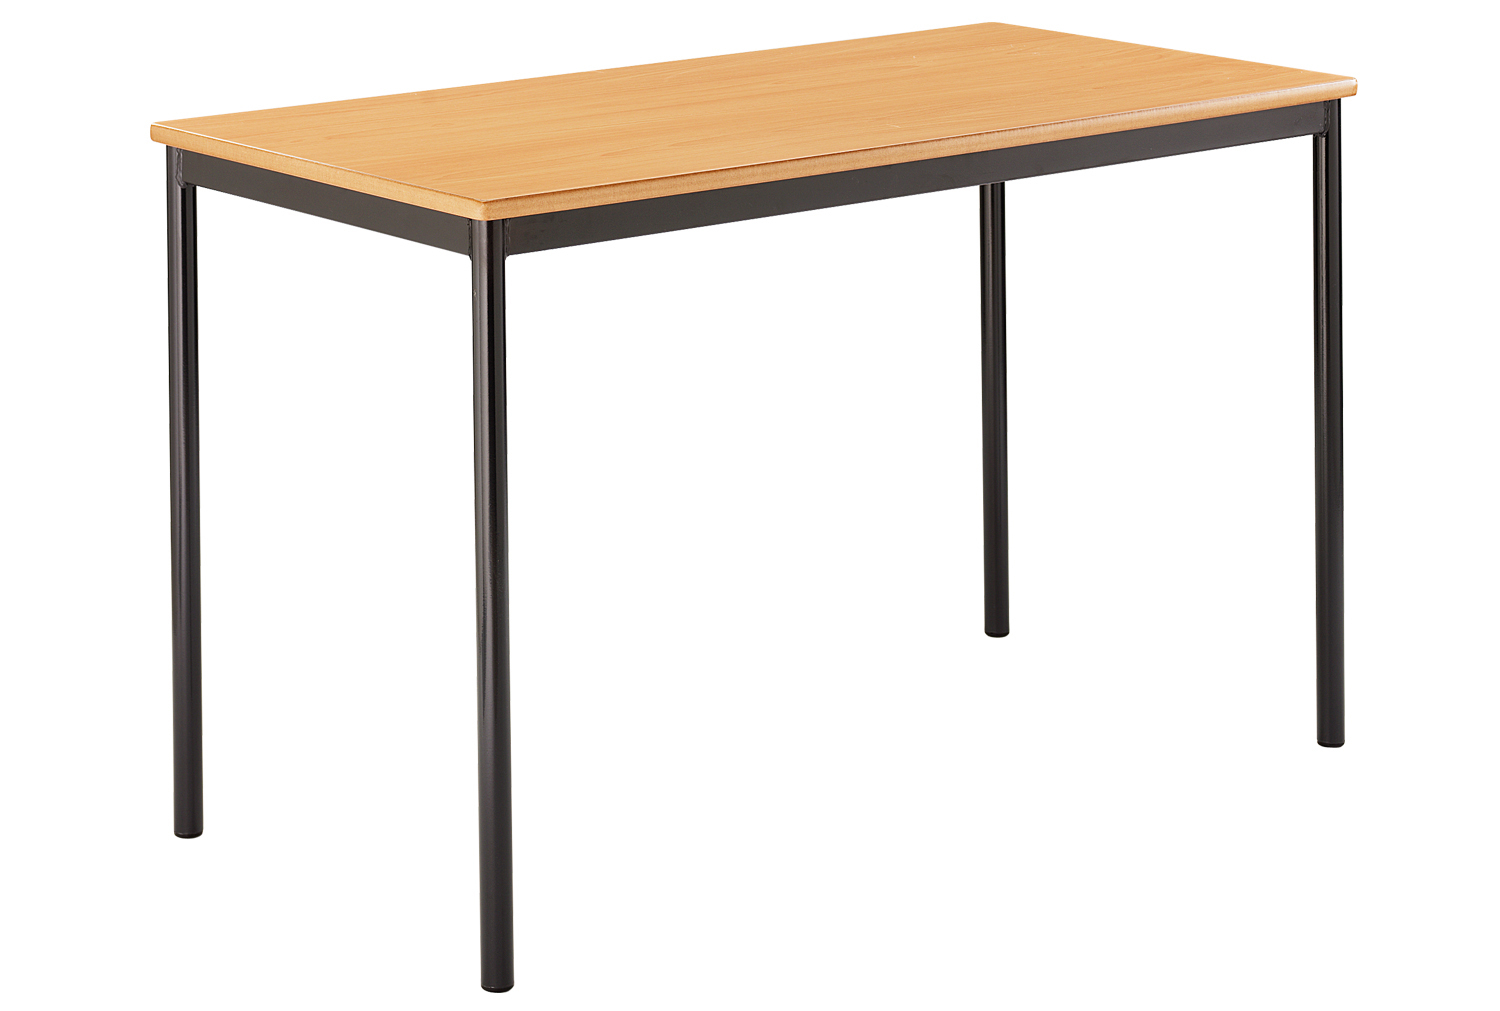 Qty 4 - Rectangular Fully Welded Classroom Tables 14+ Years, 120wx60dx76h (cm), Light Grey Frame, Beech Top, MDF Beech Edge